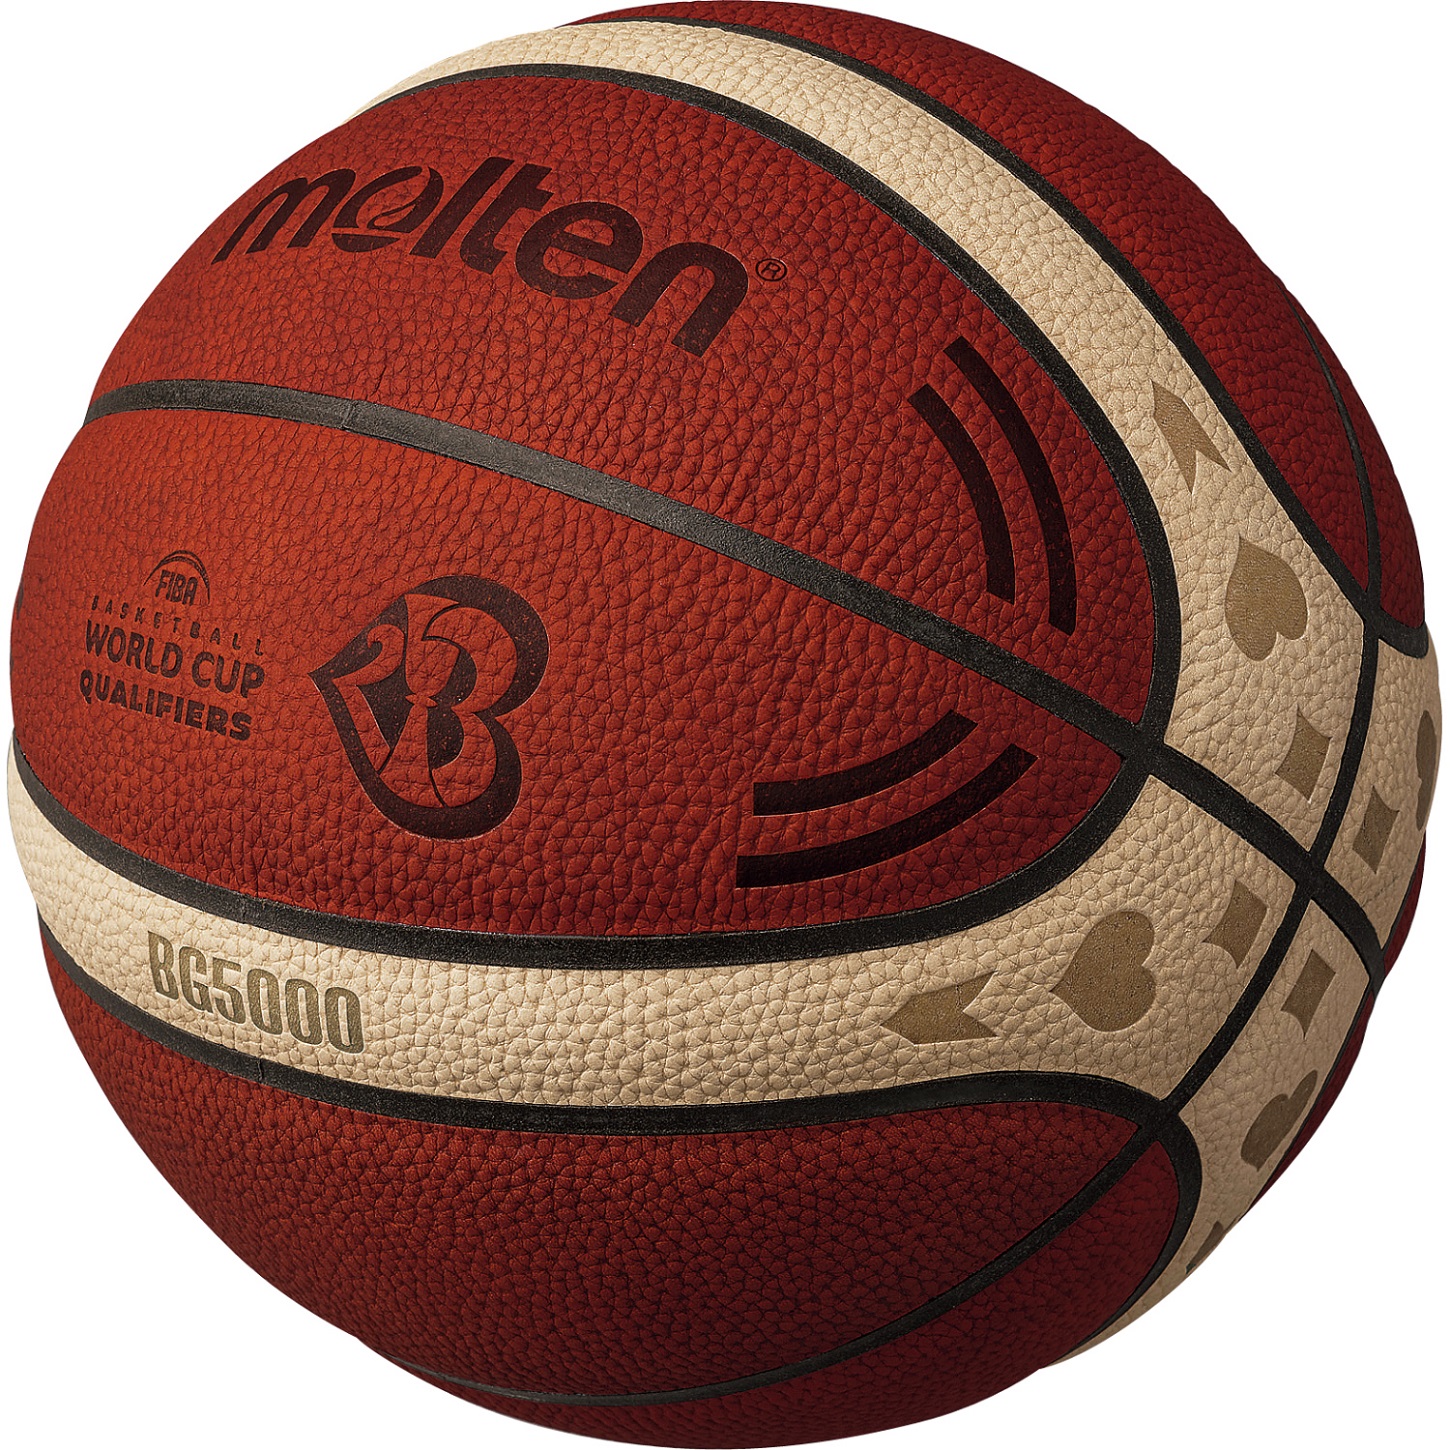 molten モルテン B7G5000-Q2Z FIBAバスケットボールワールドカップ2023大陸予選公式試合球 BG5000 天然皮革 国際公認球 7号球 中学生以上の男子 バスケットボール ボール